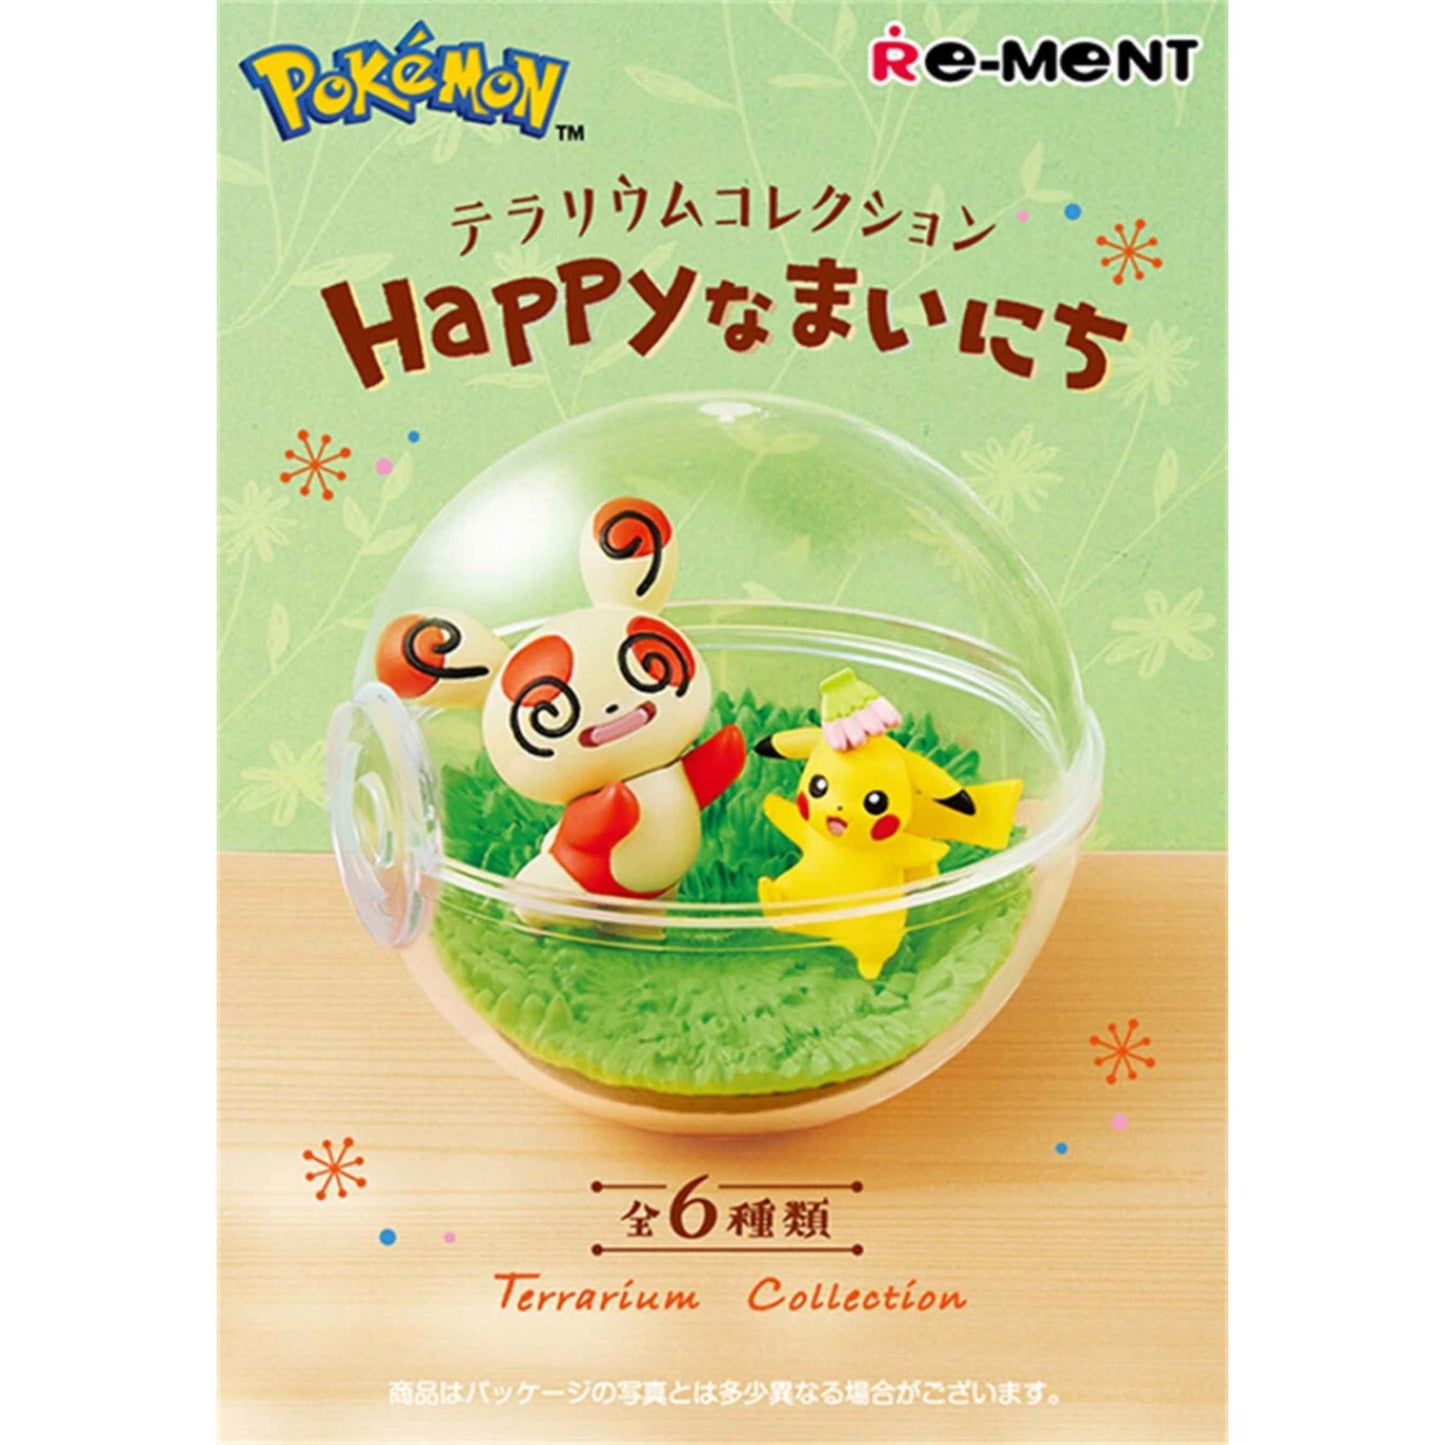 【New】re-Ment: Pokémon Terrarium Collection Happy Time Series Blind Box Random Style